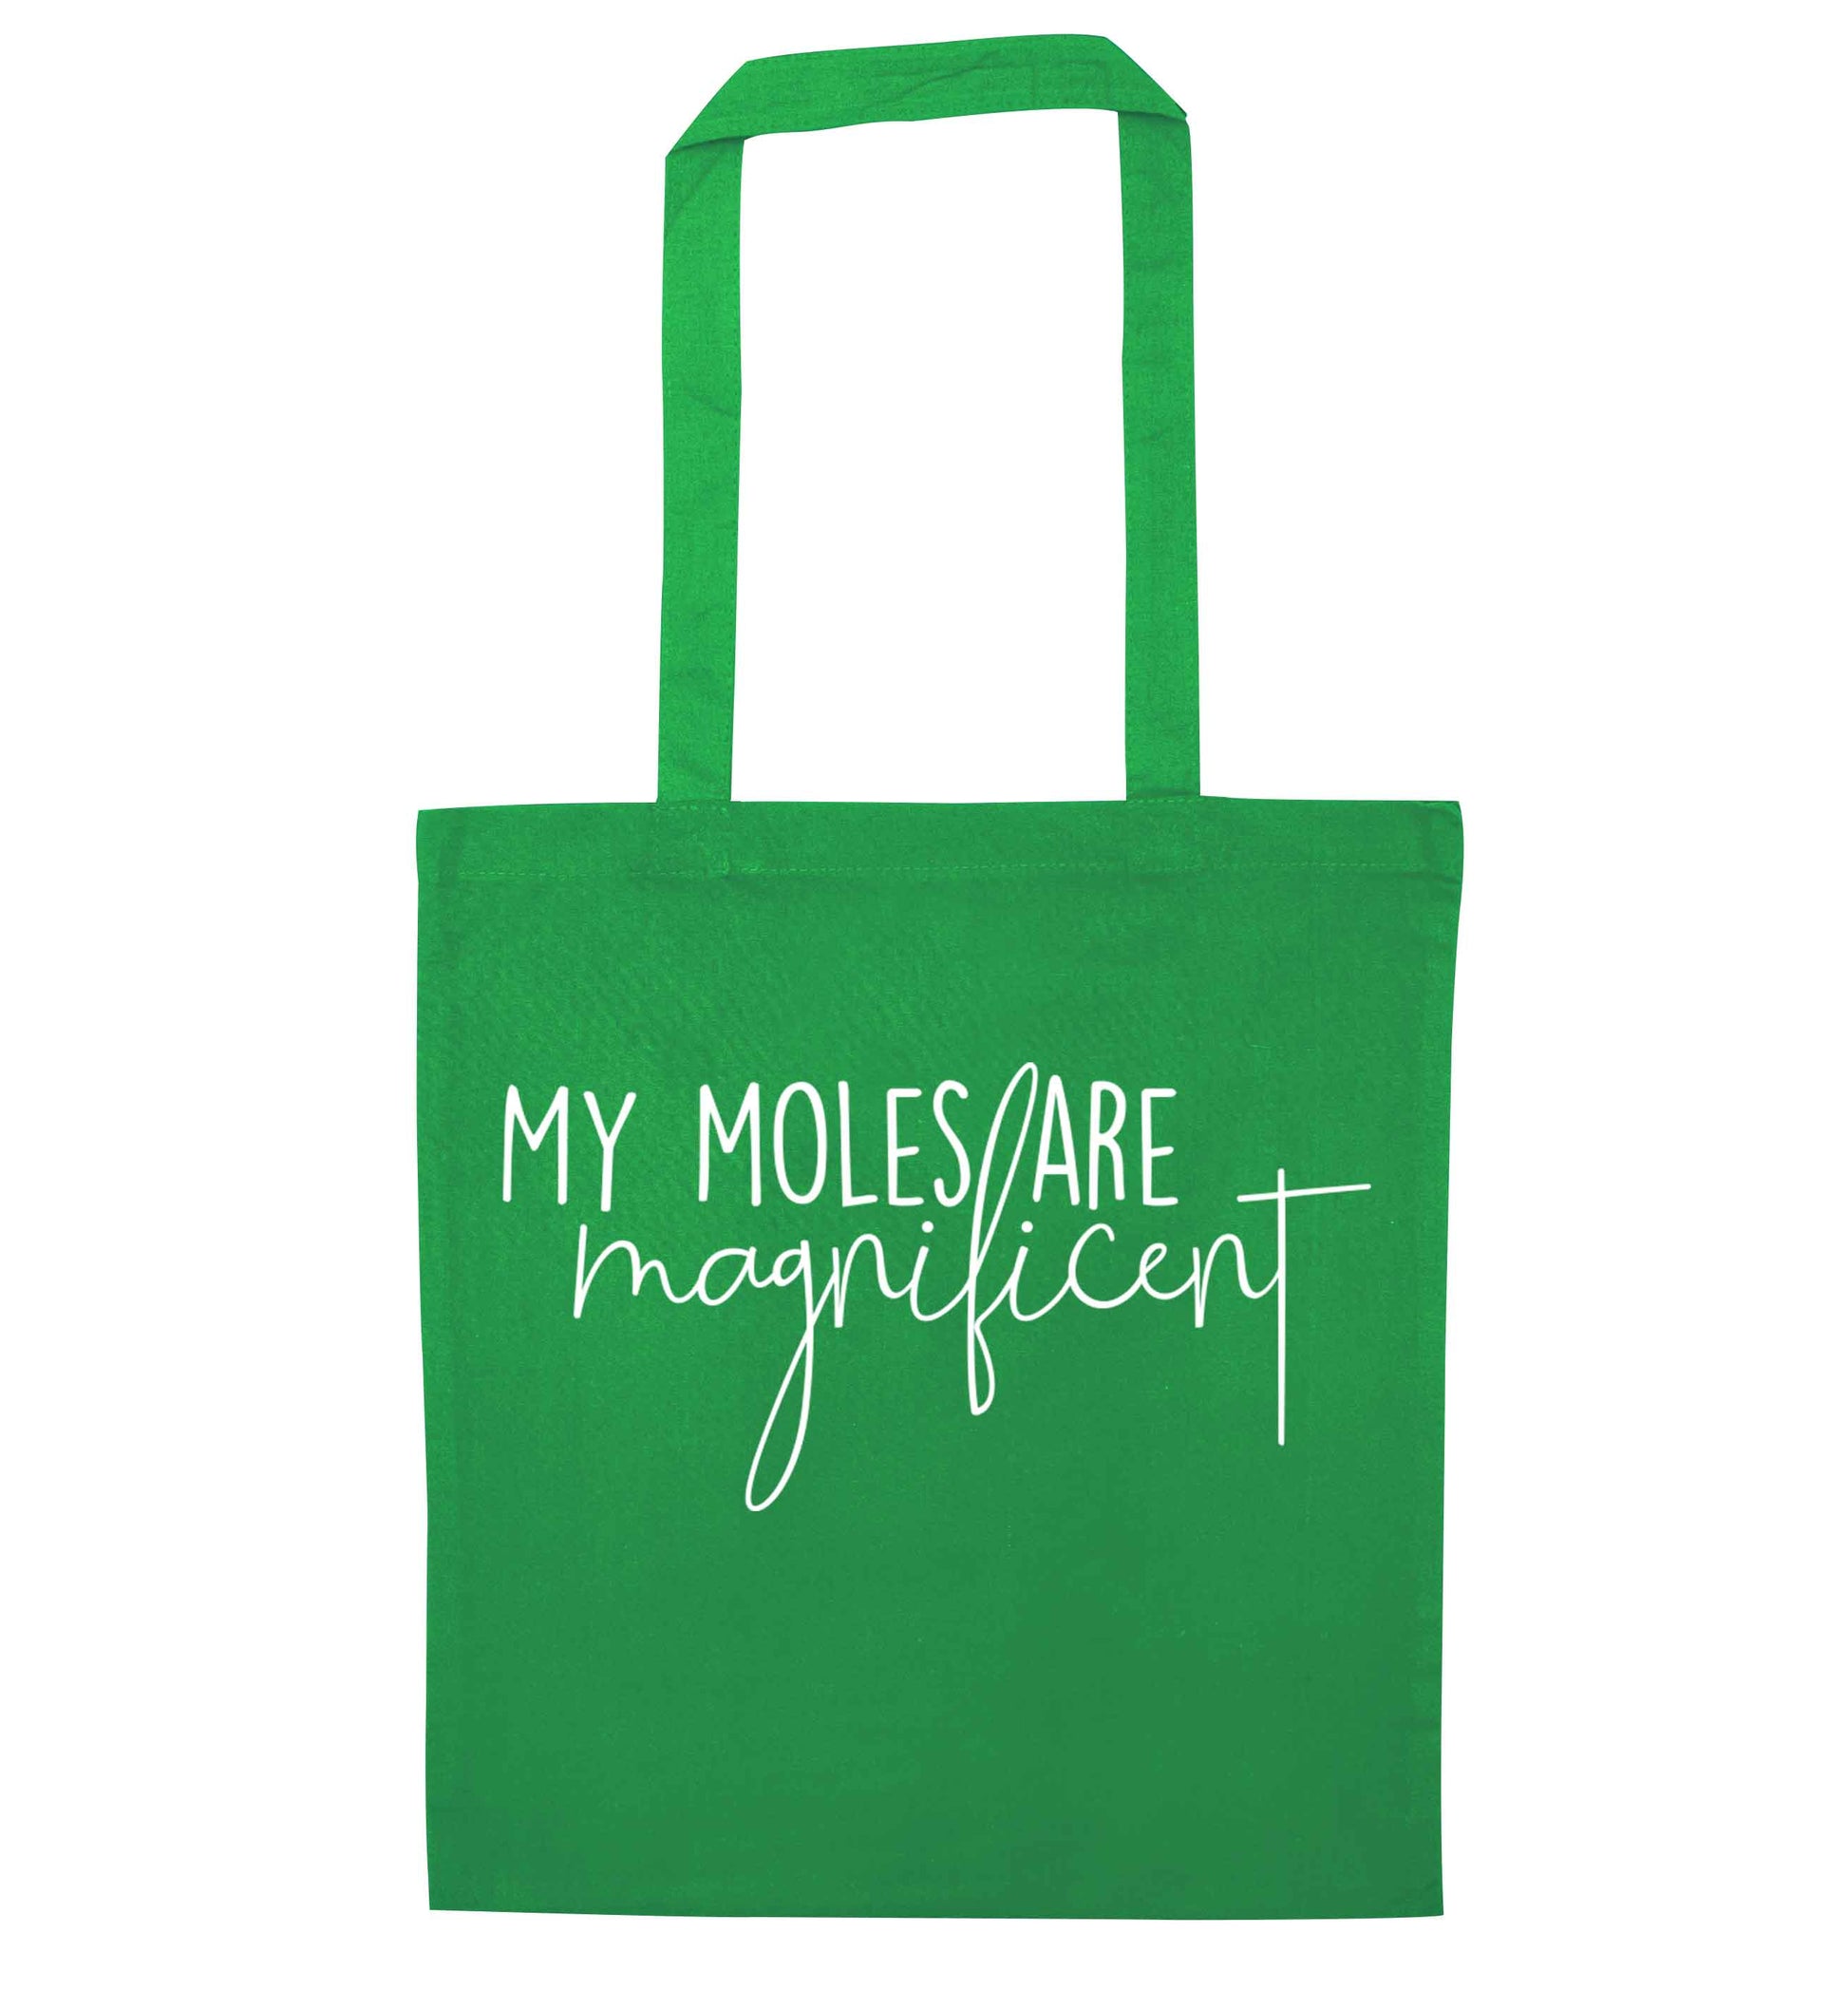 My moles are magnificent green tote bag